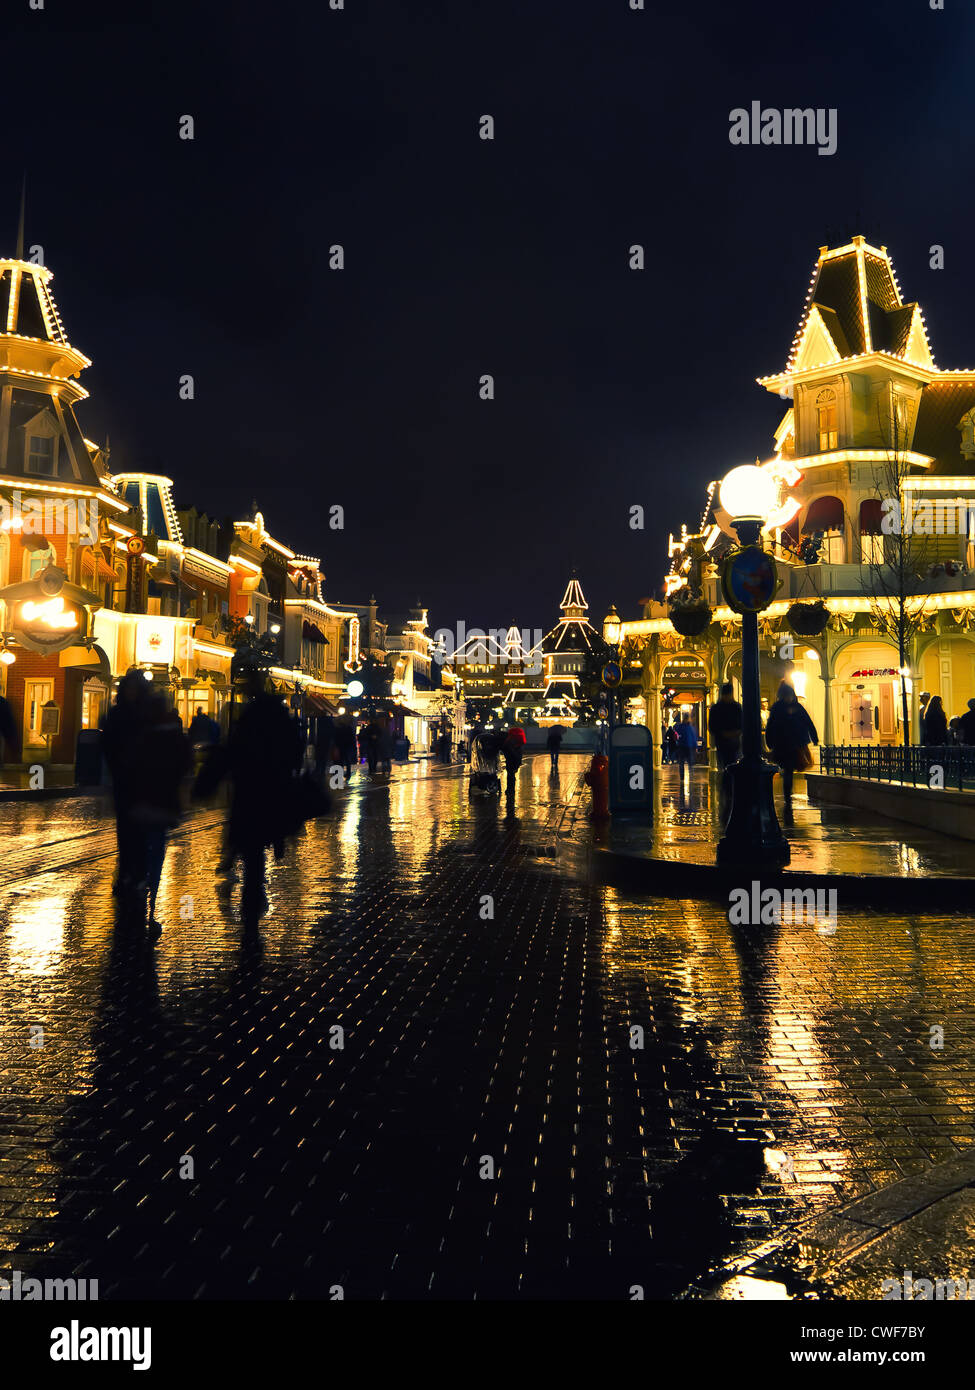 Main street at Disneyland Paris illuminated in the rain at night, Stock Photo